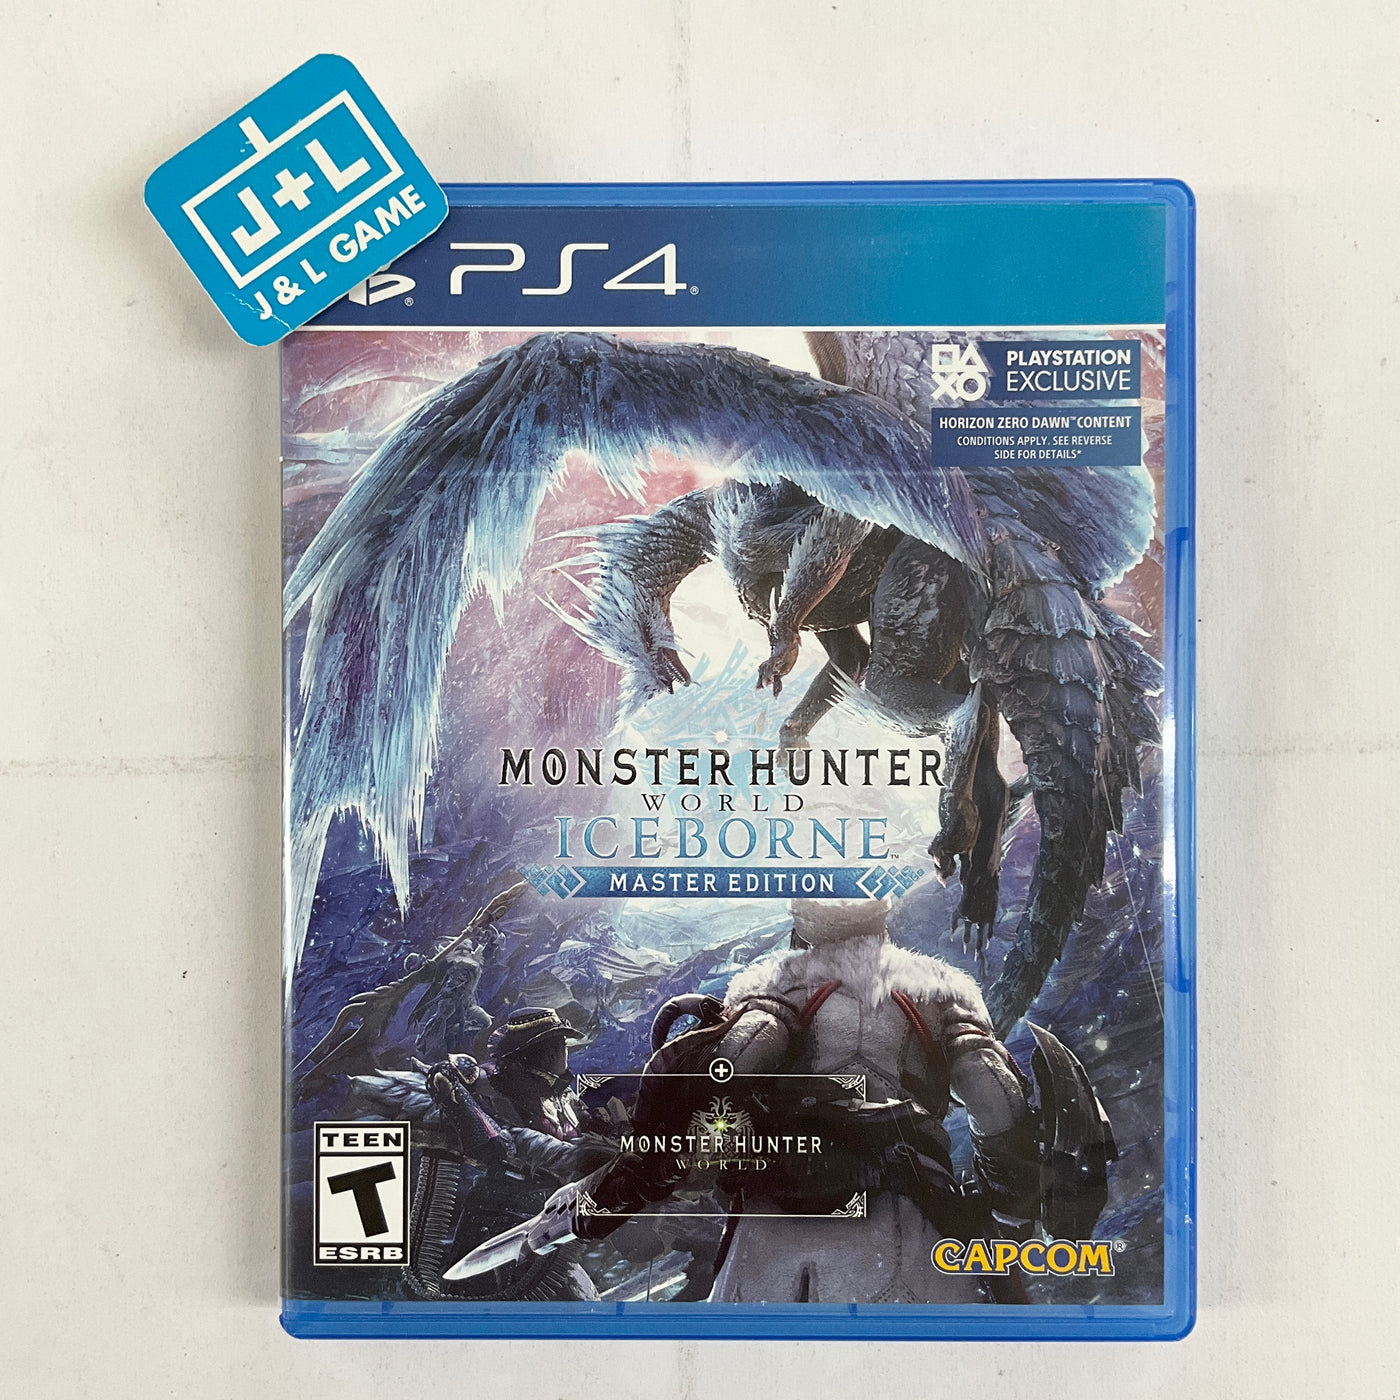 Monster Hunter World: [P J&L 4 PlayStation Game (PS4) - Master | Edition Iceborne